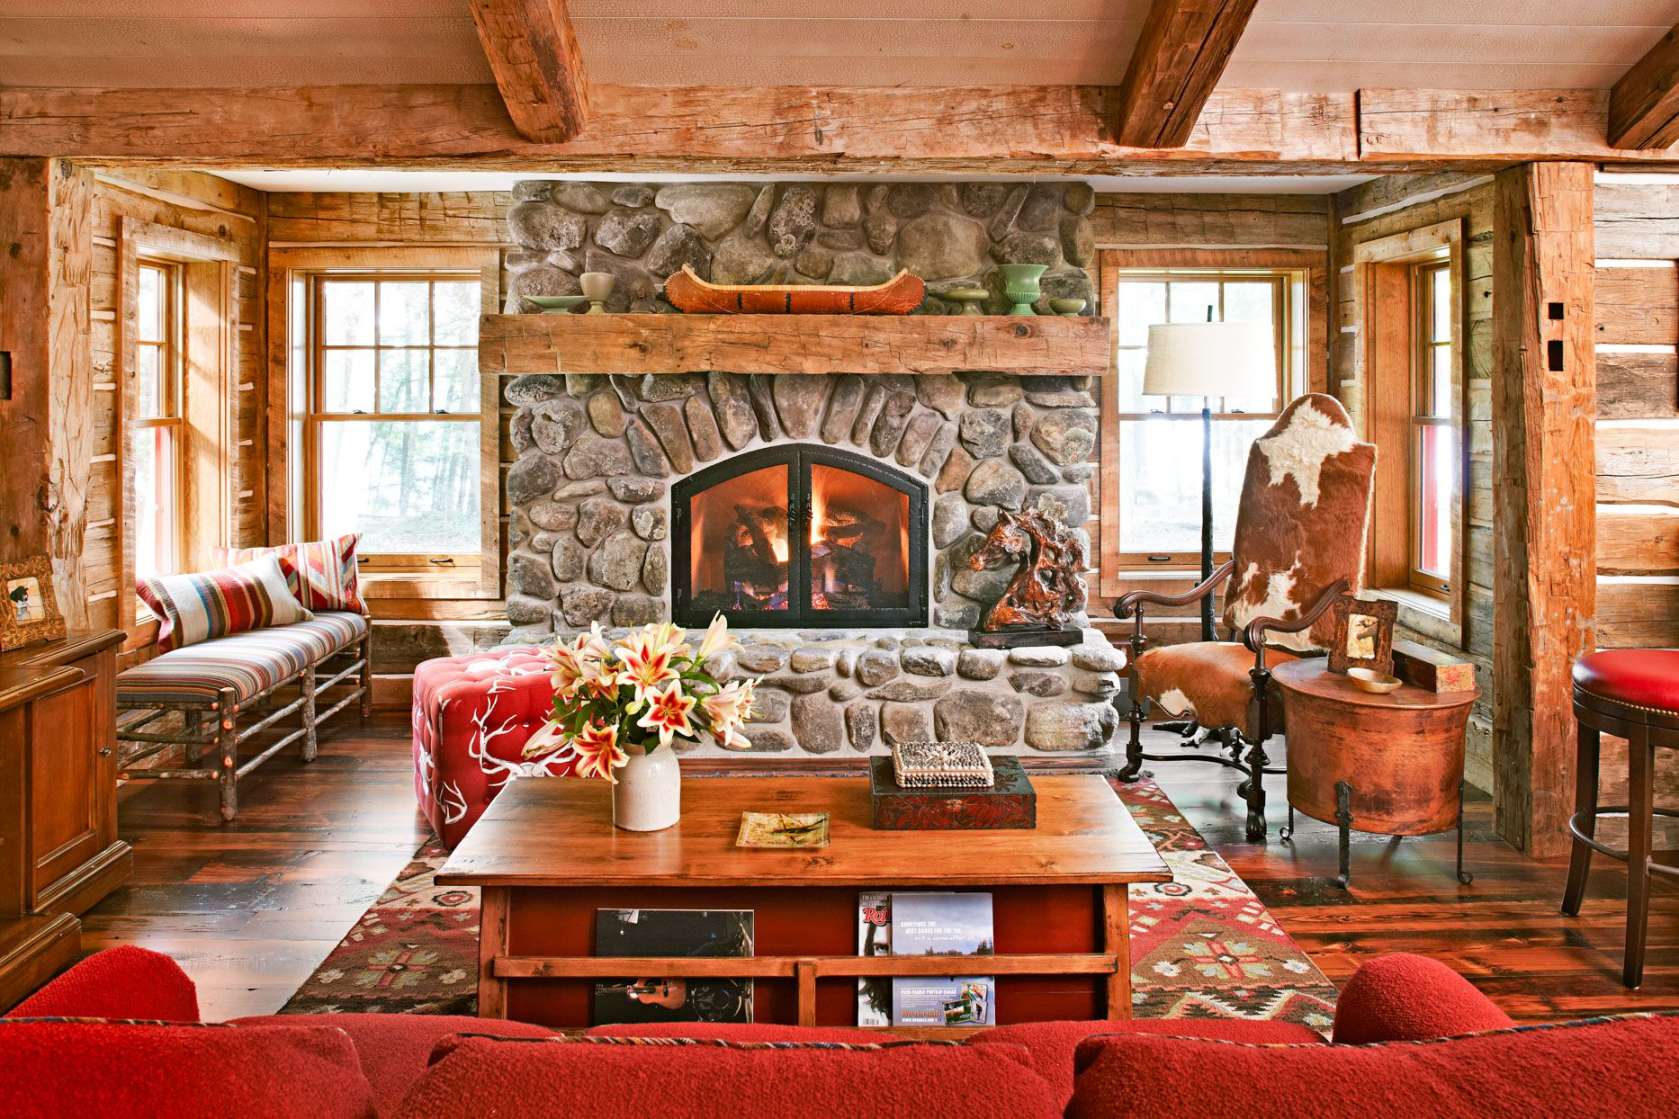 Rustic Fireplace Mantel Ideas That Make a Room Feel Warmer